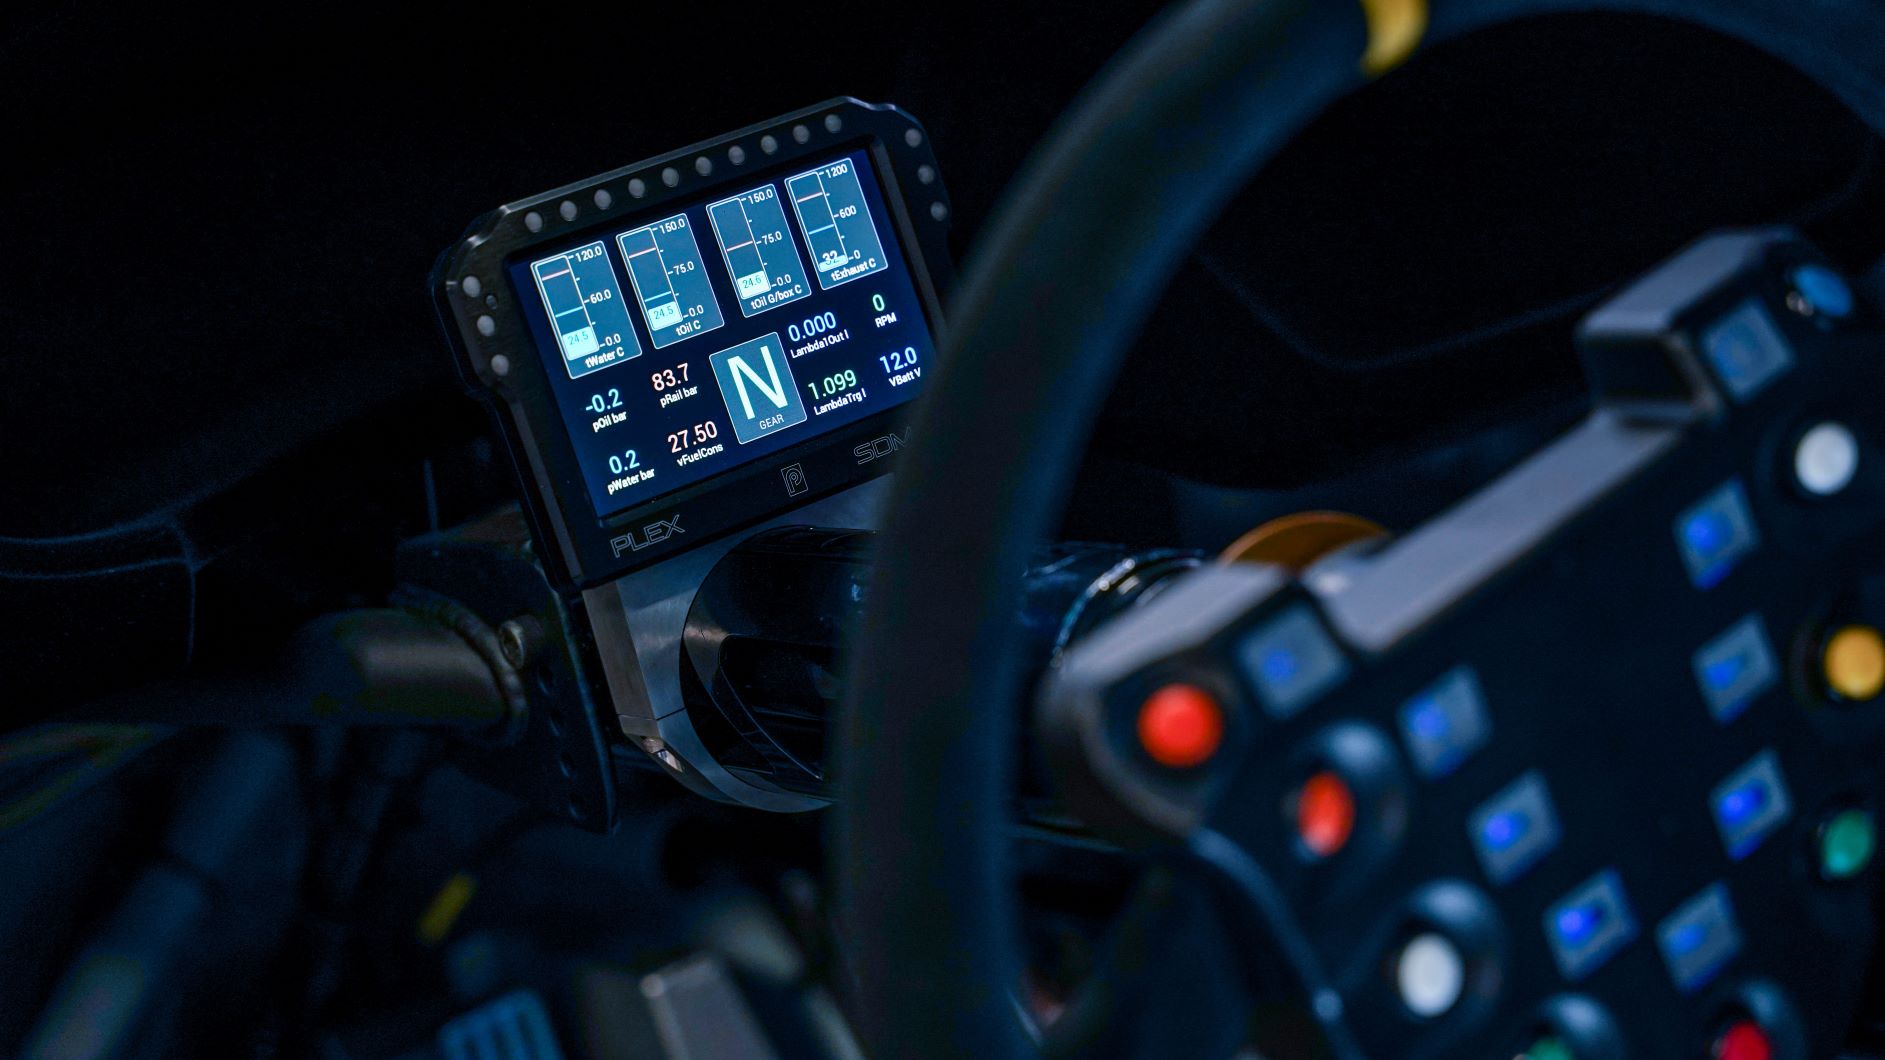 Plex Tuning SDM 550 datalogger, FIA R4 motorpsort electronics supplied by Longman Racing